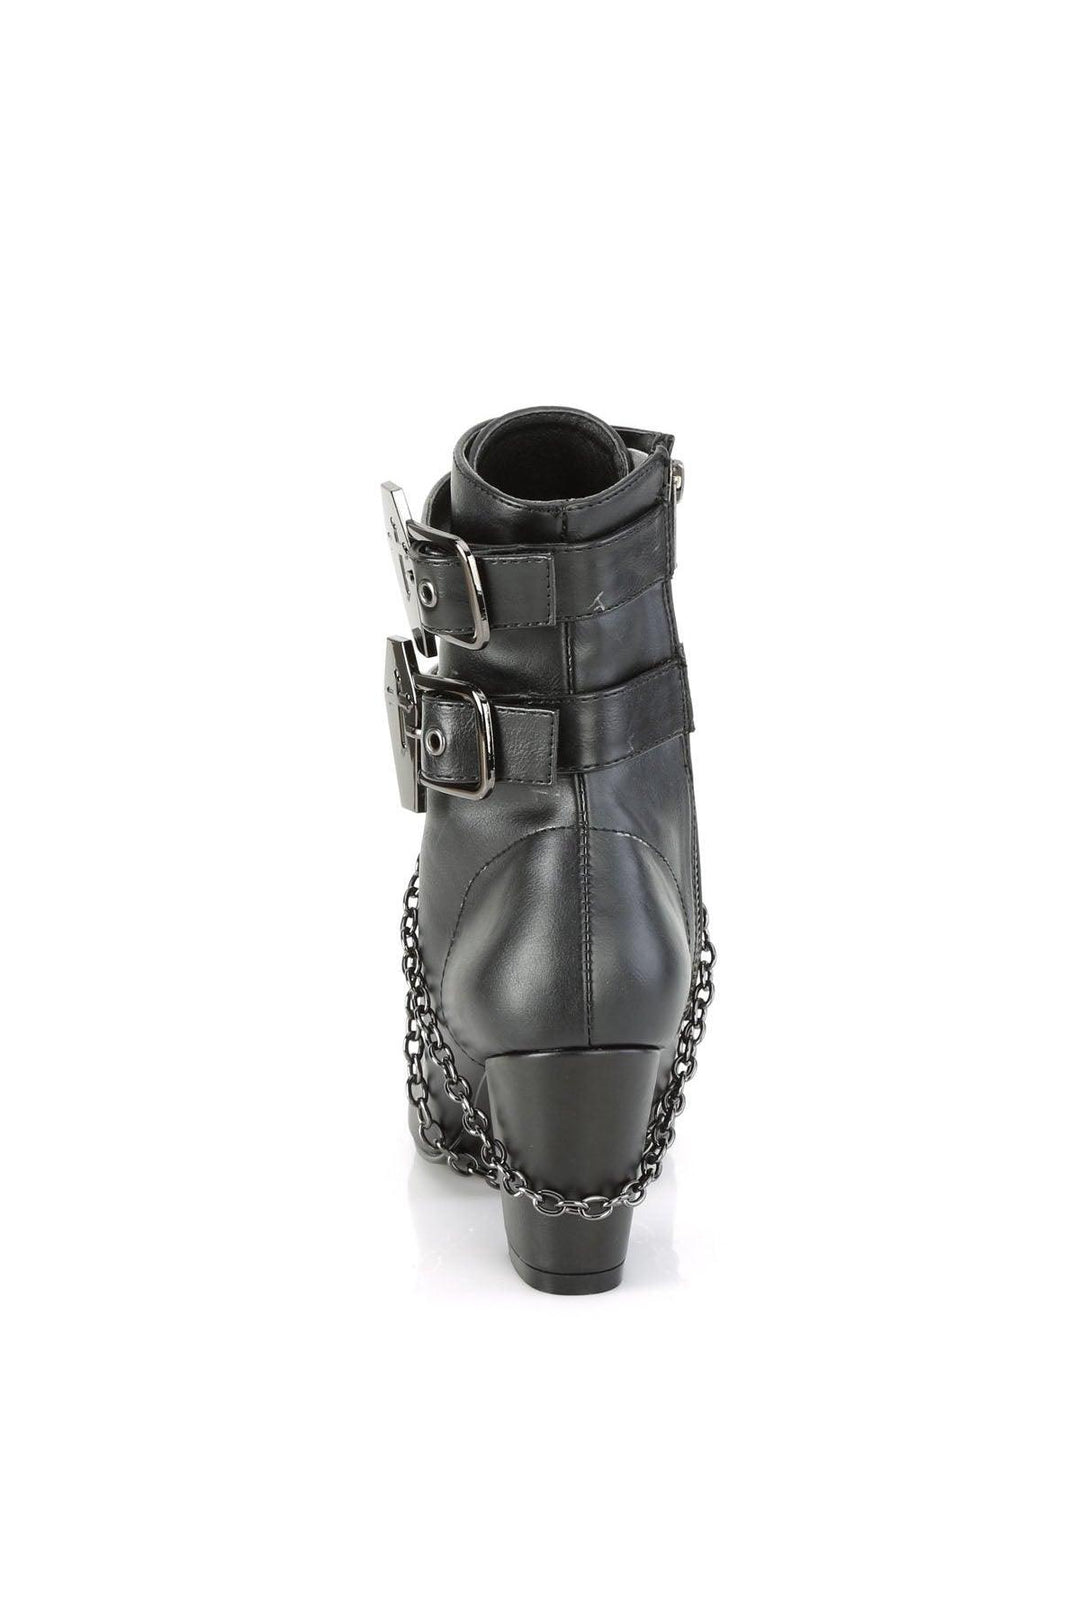 Demonia Casket Crush Ankle Boots VIK128 [Black Vegan Leather] - VampireFreaks